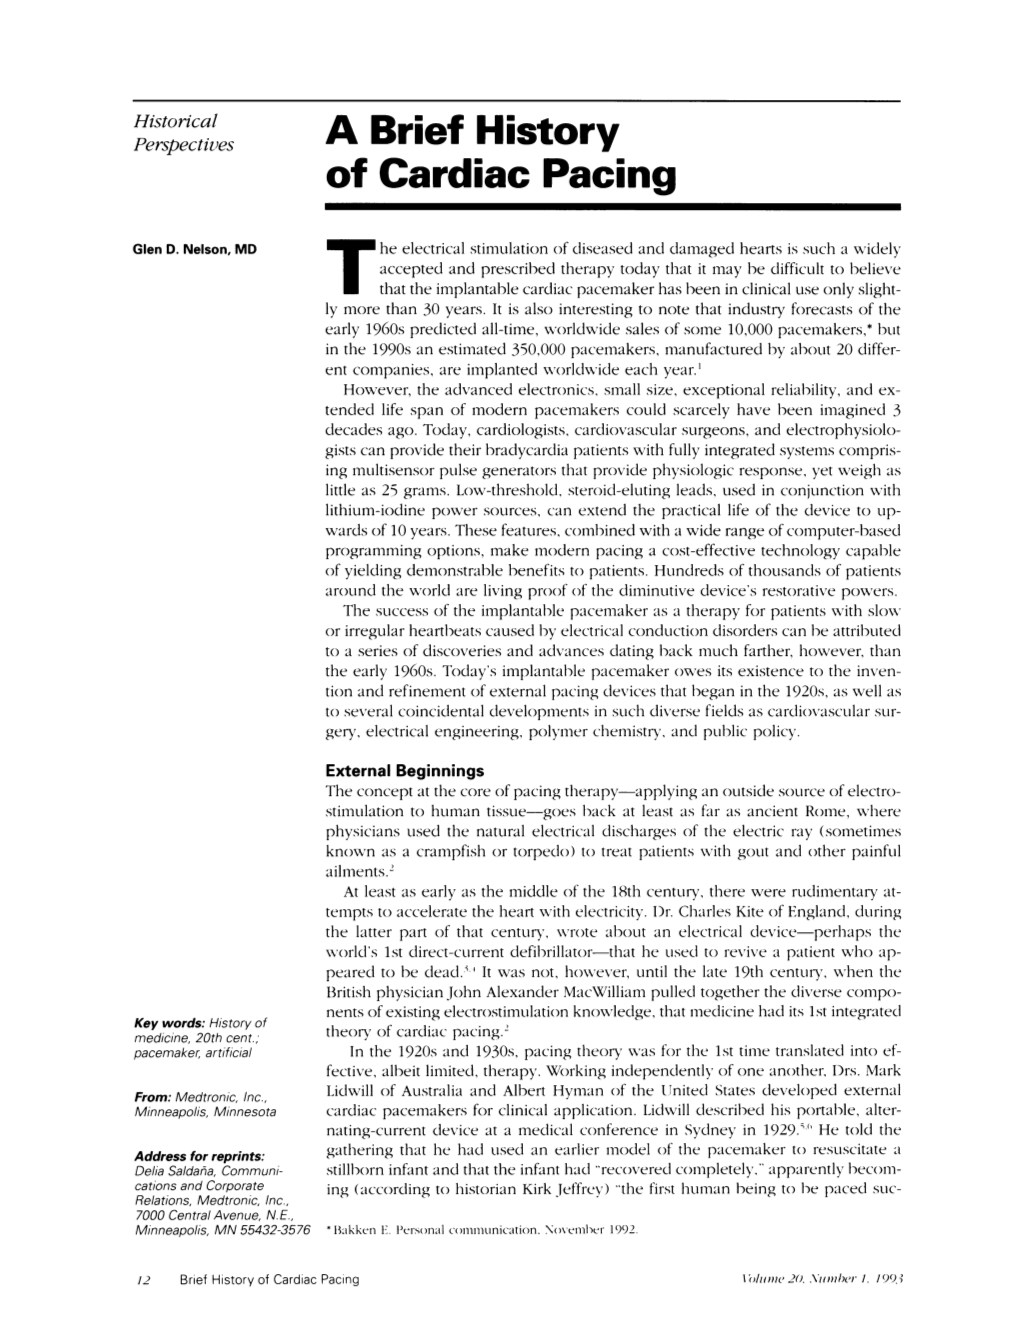 A Brief History of Cardiac Pacing